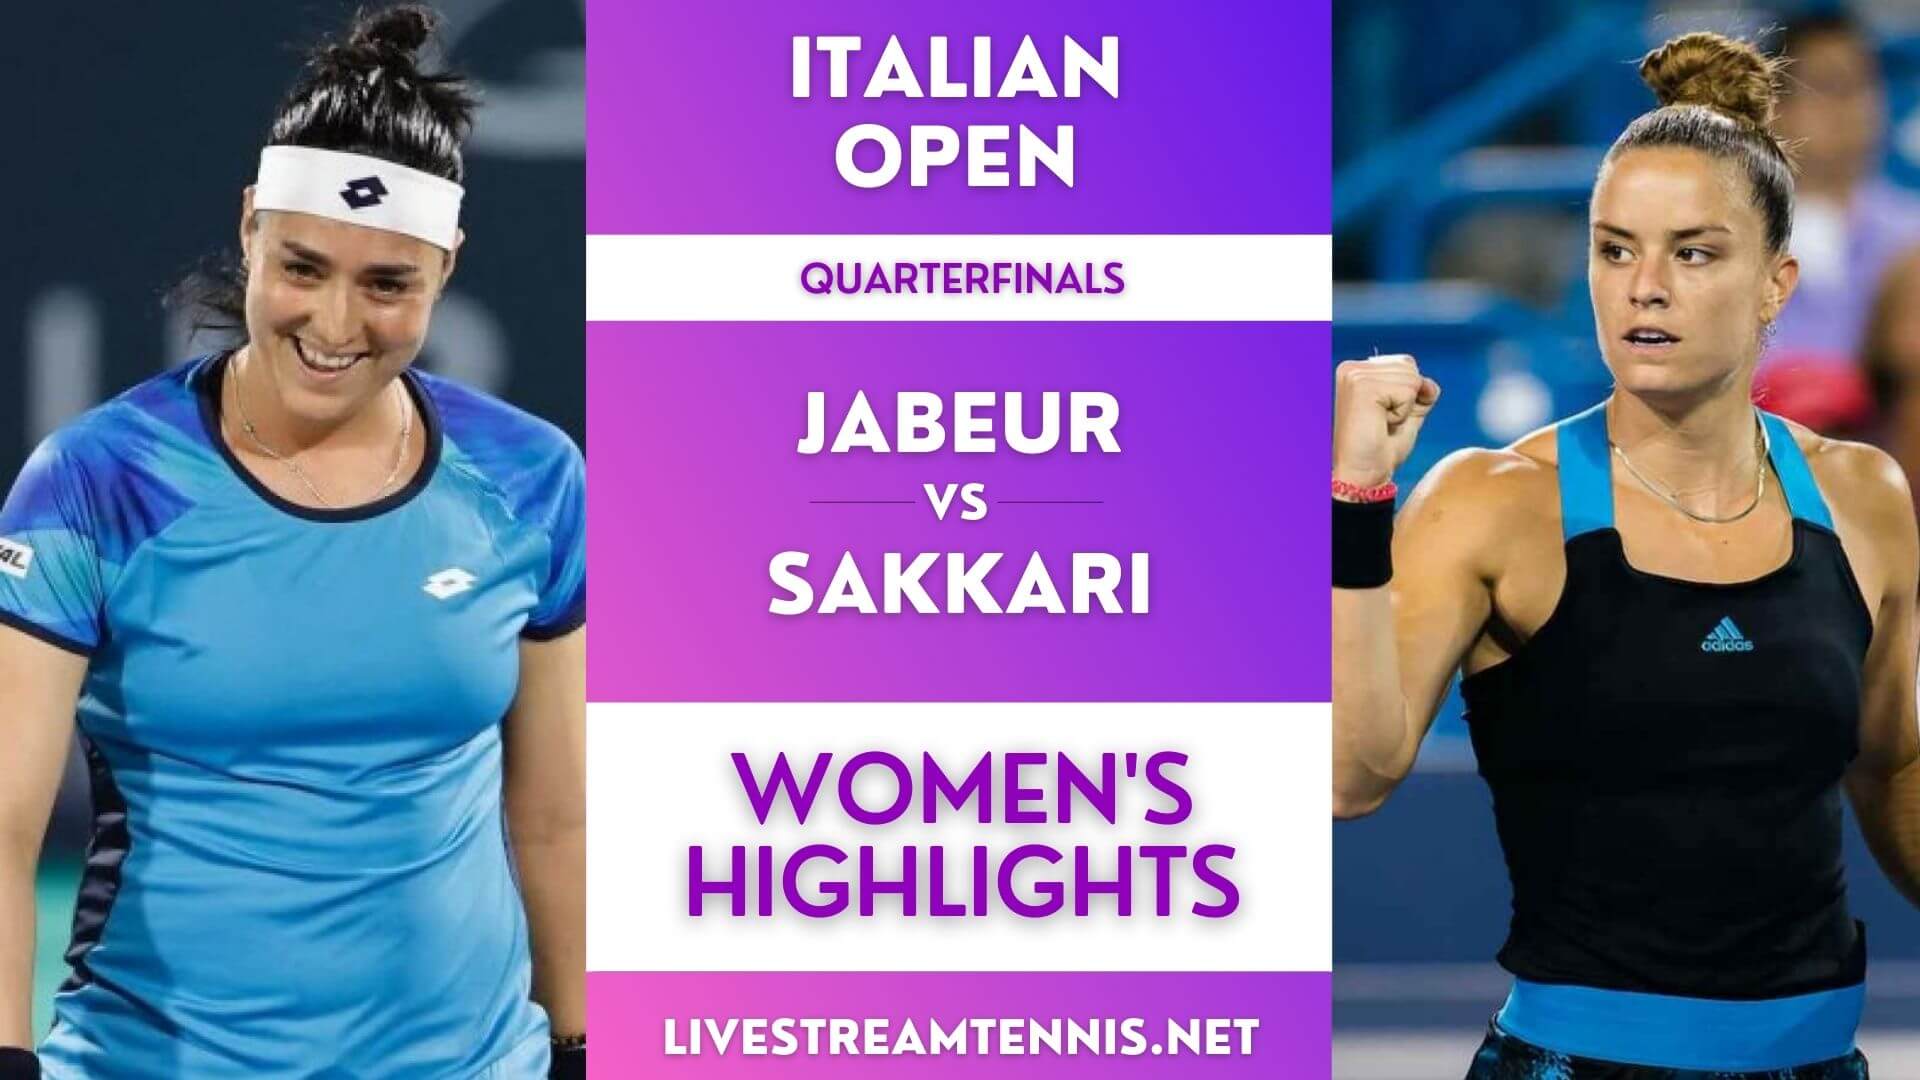 Italian Open Ladies Quarterfinal 2 Highlights 2022